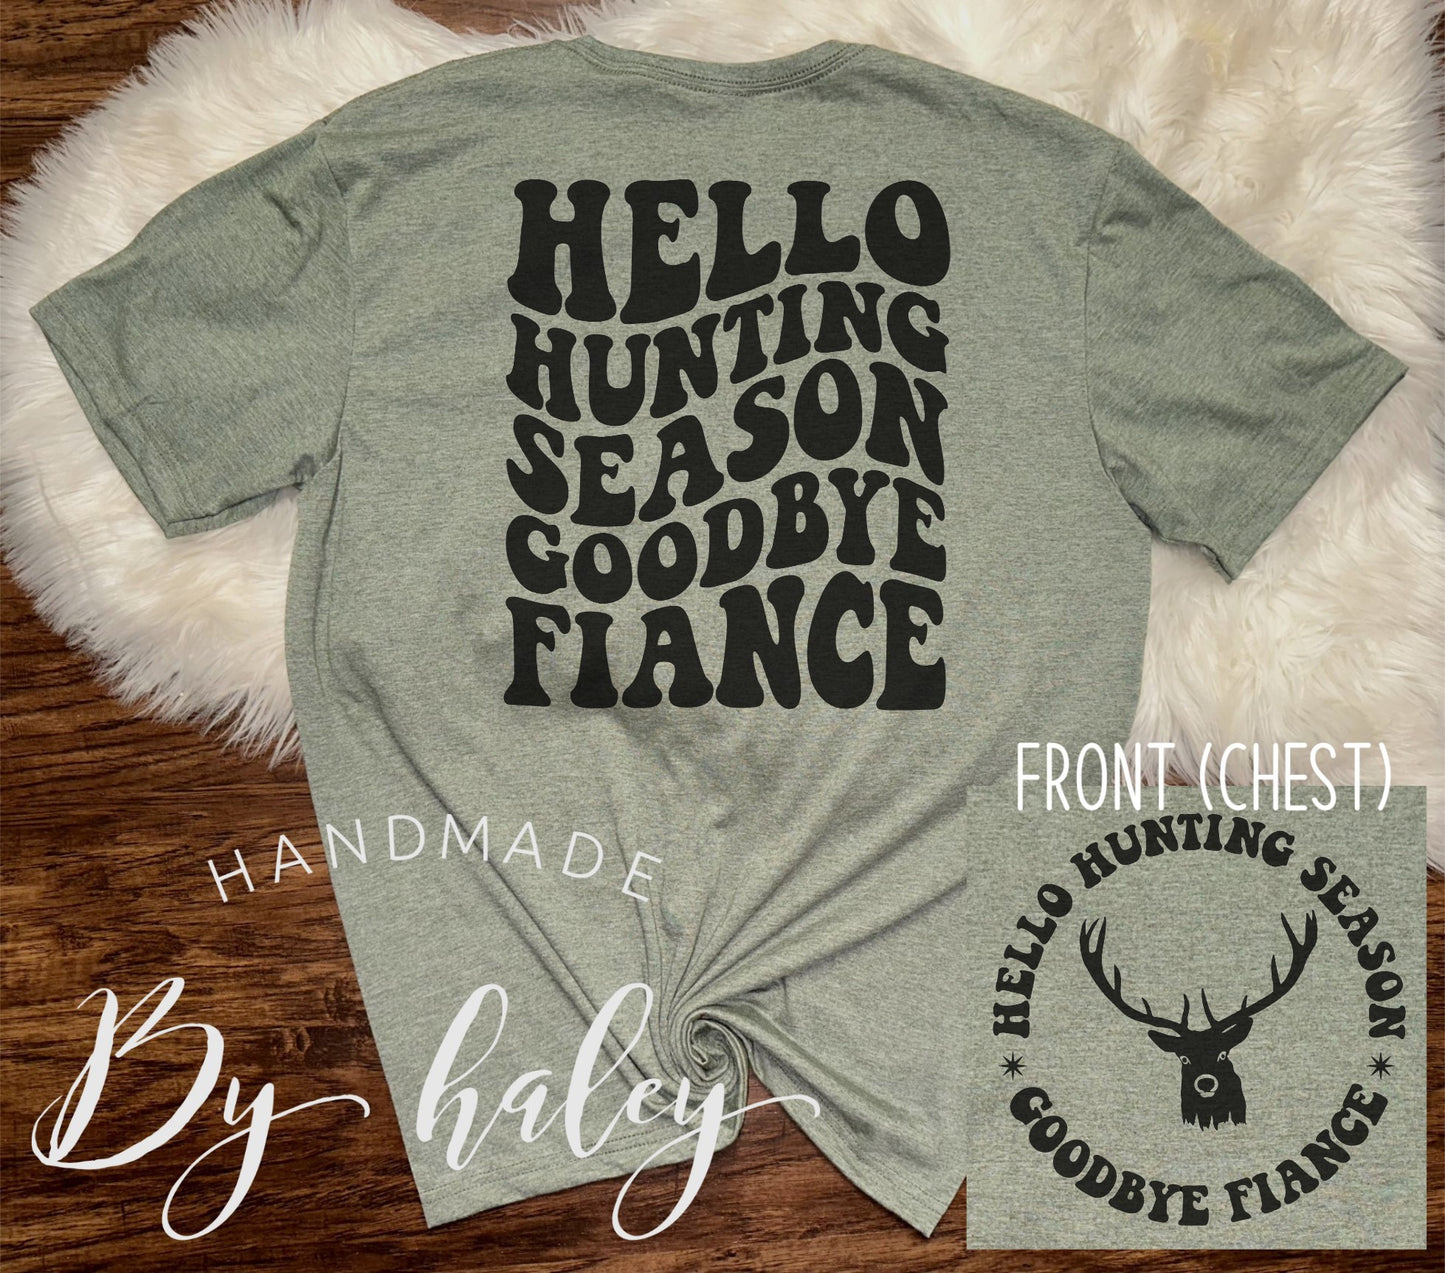 Hello Hunting Season, Goodbye Fiance T-Shirt